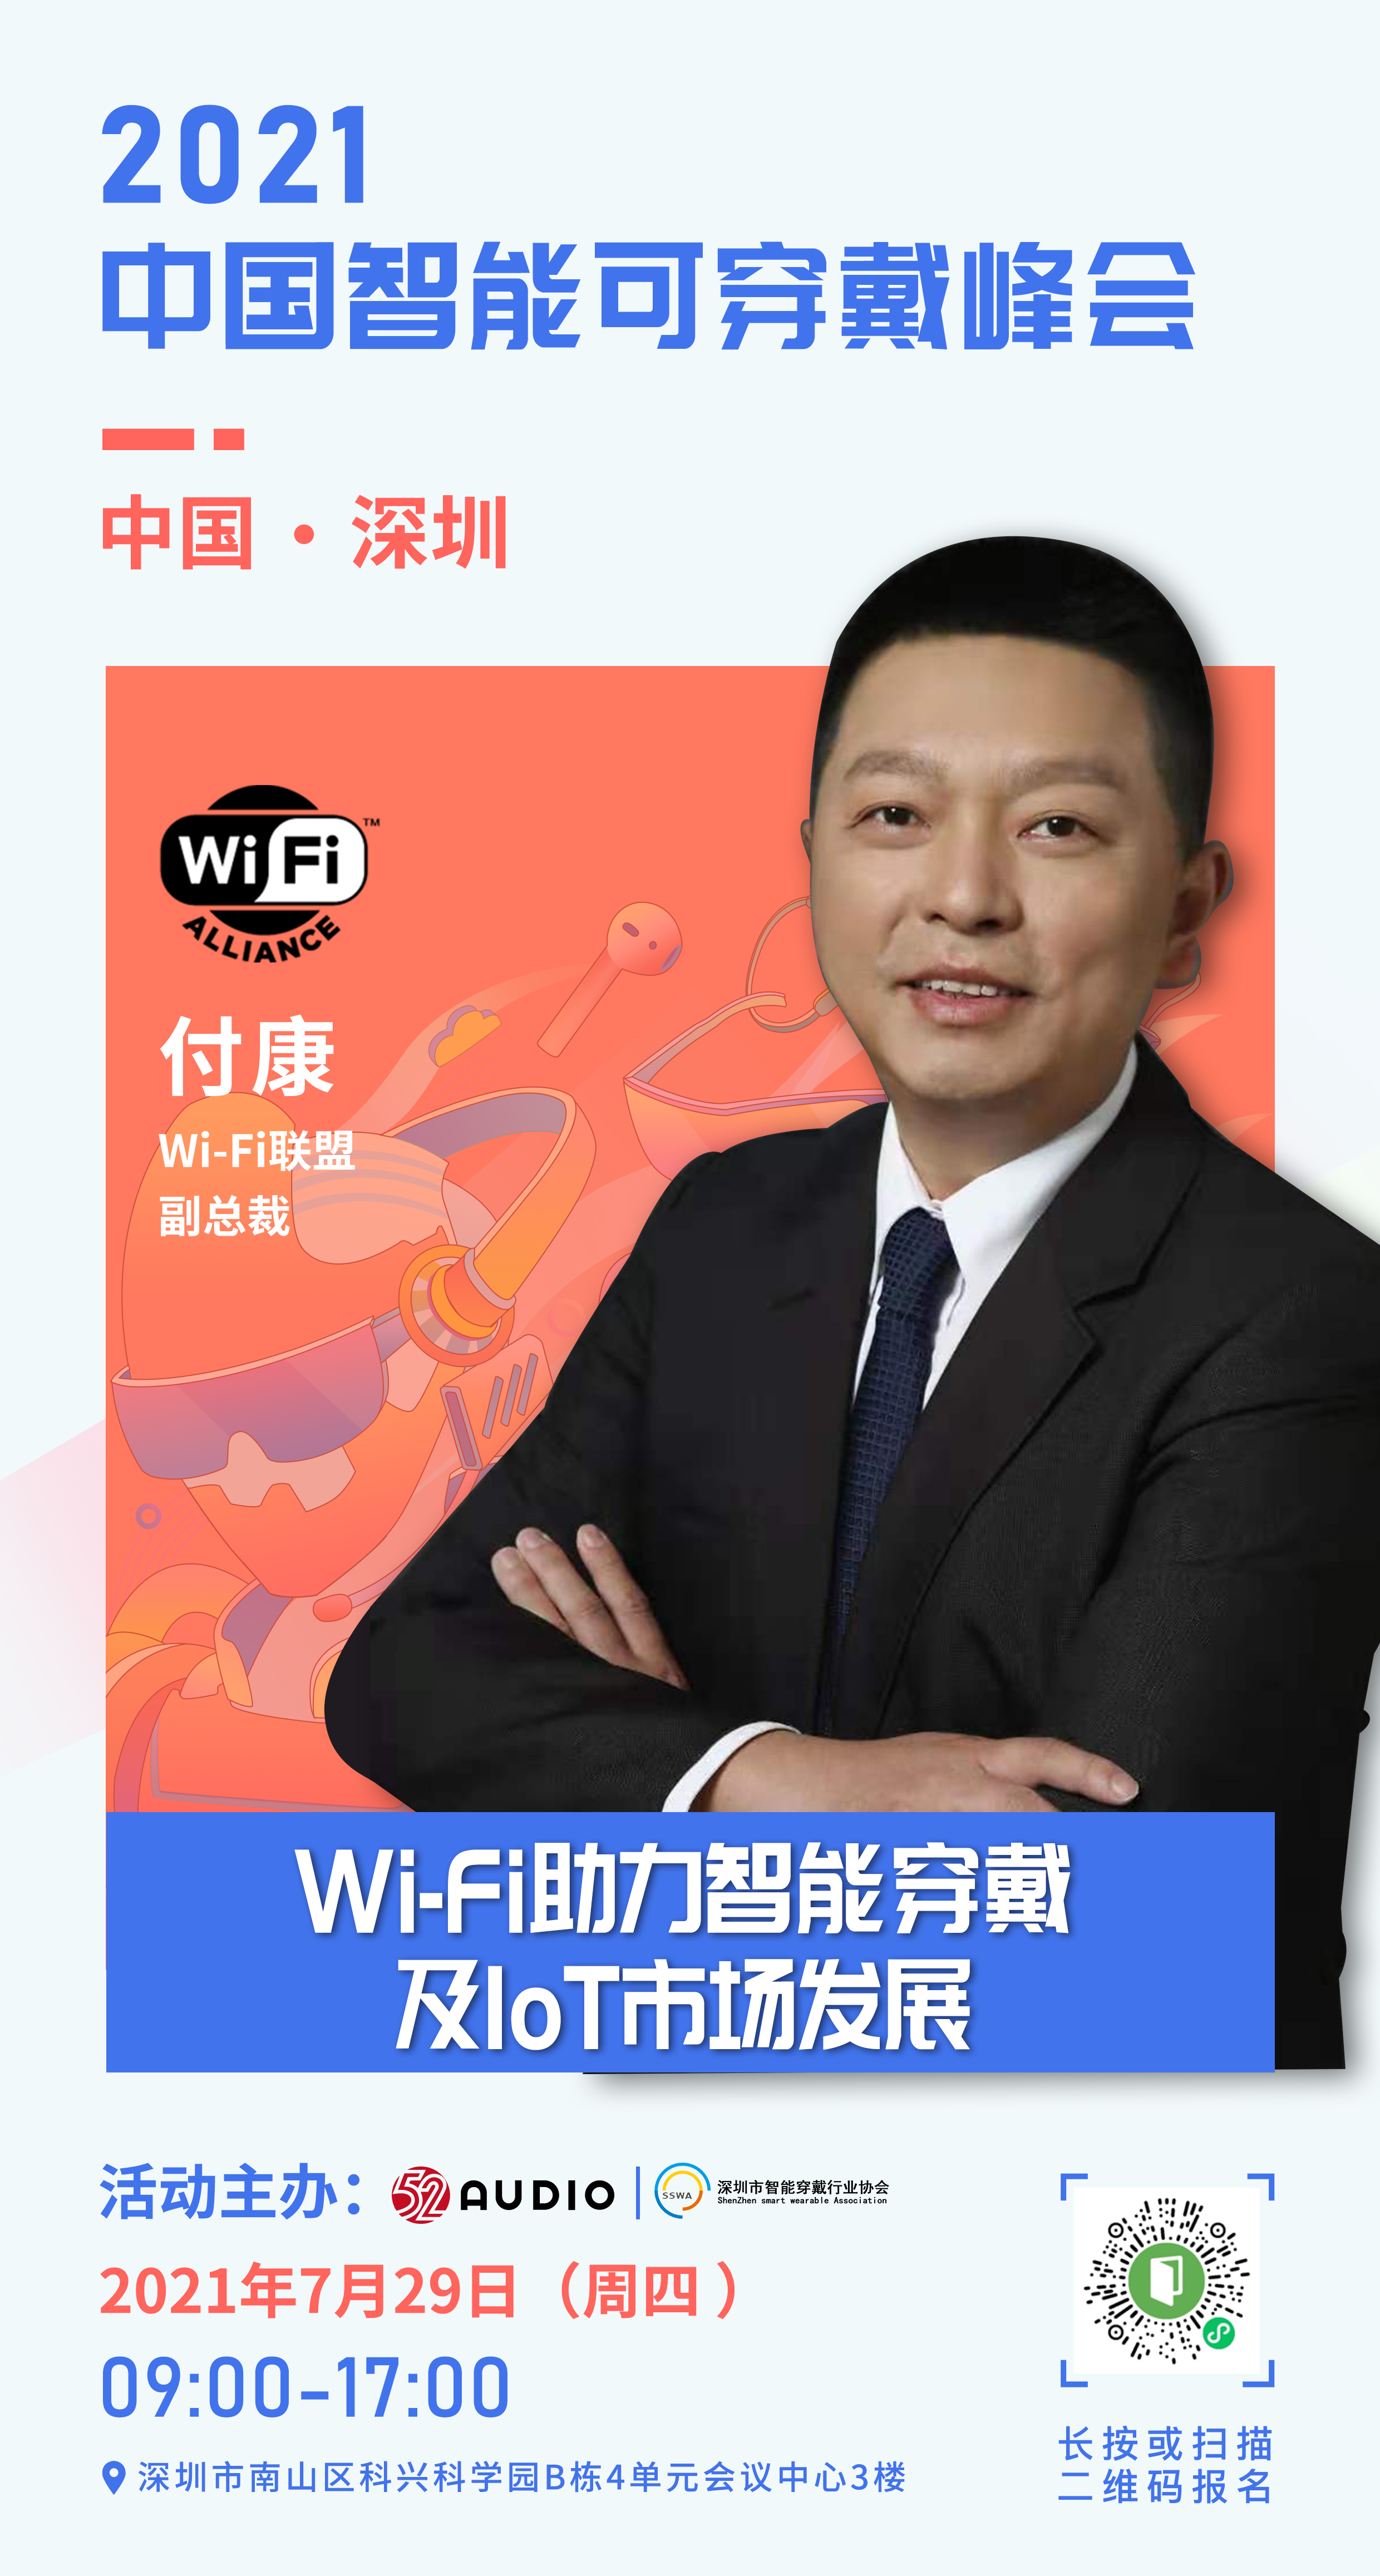 Wi-Fi联盟将在7月29日智能可穿戴峰会上分享《Wi-Fi助力智能穿戴及IoT市场发展》-我爱音频网